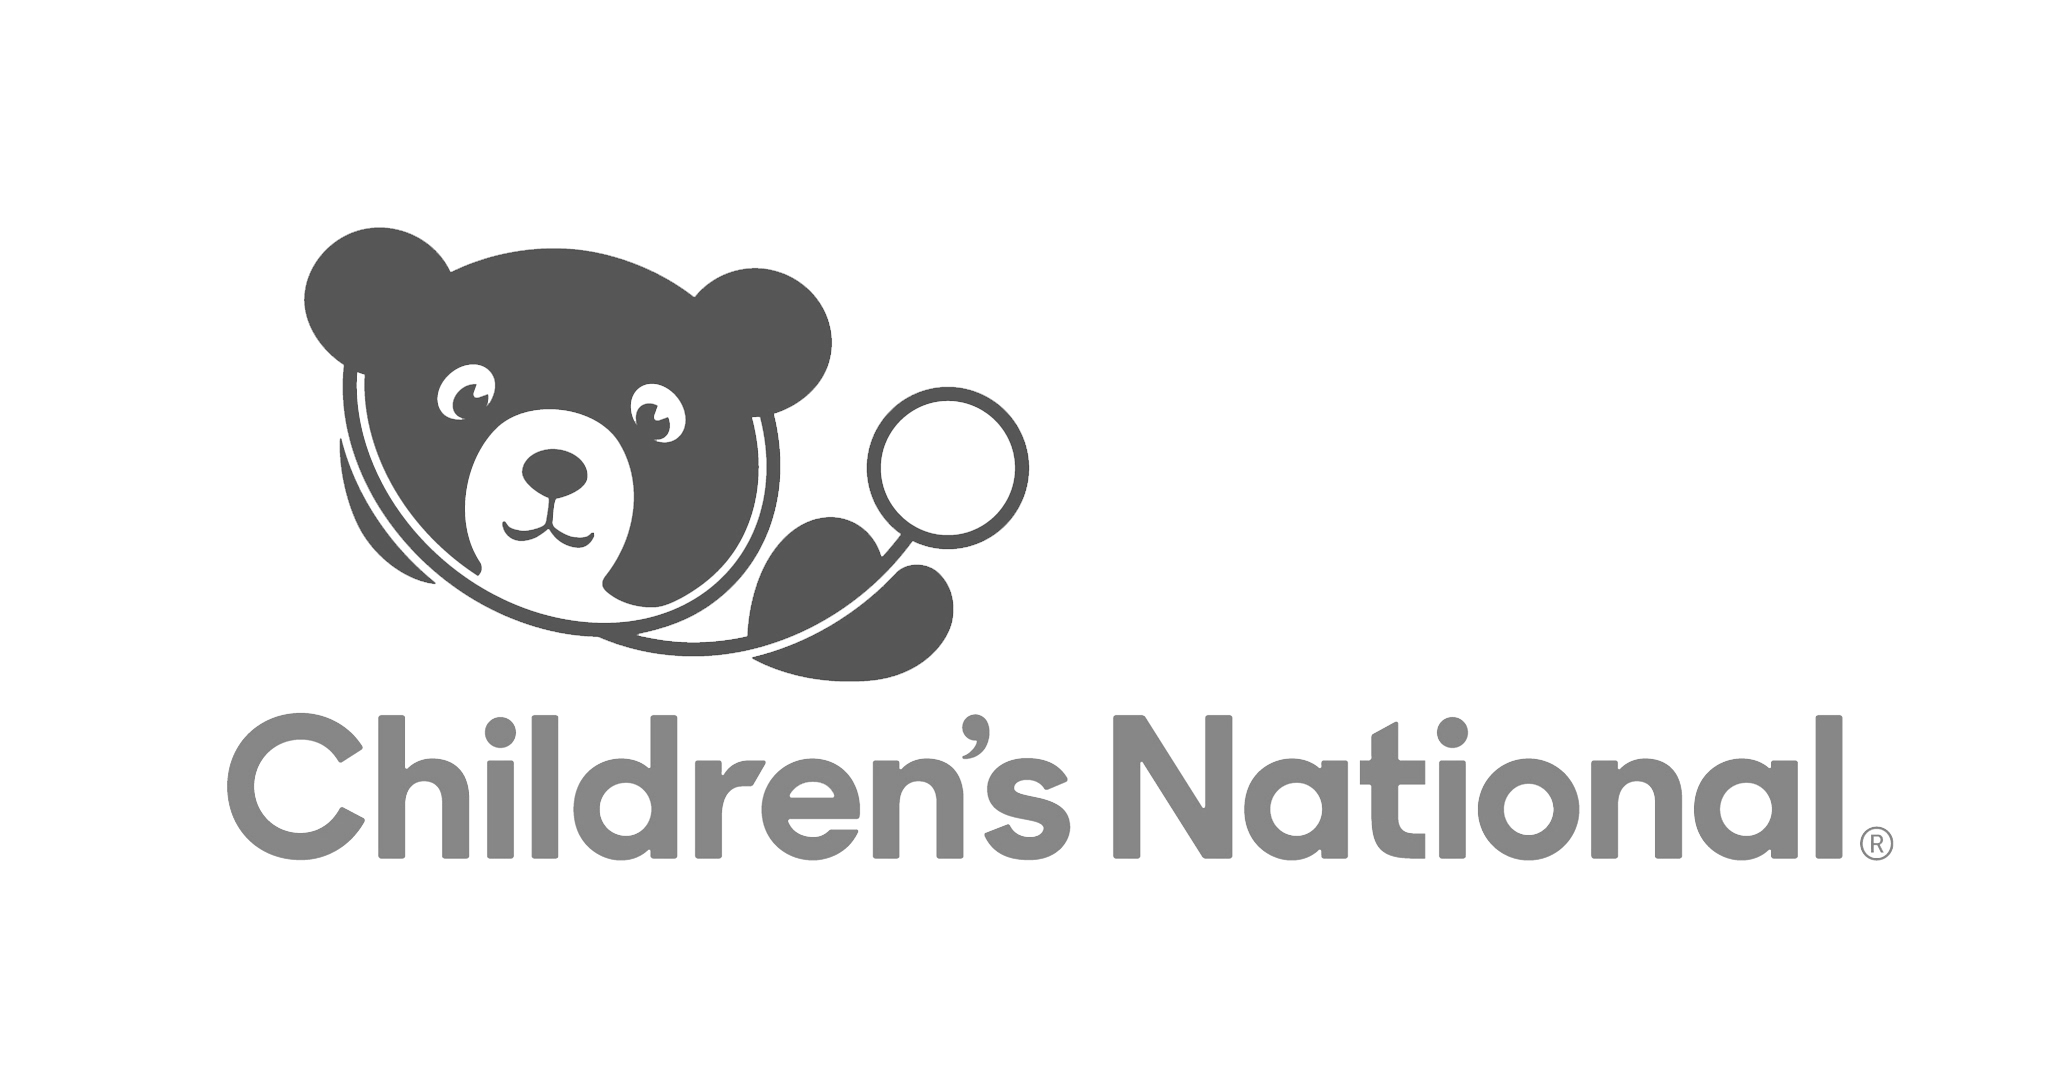 Childrens Hospital Logo